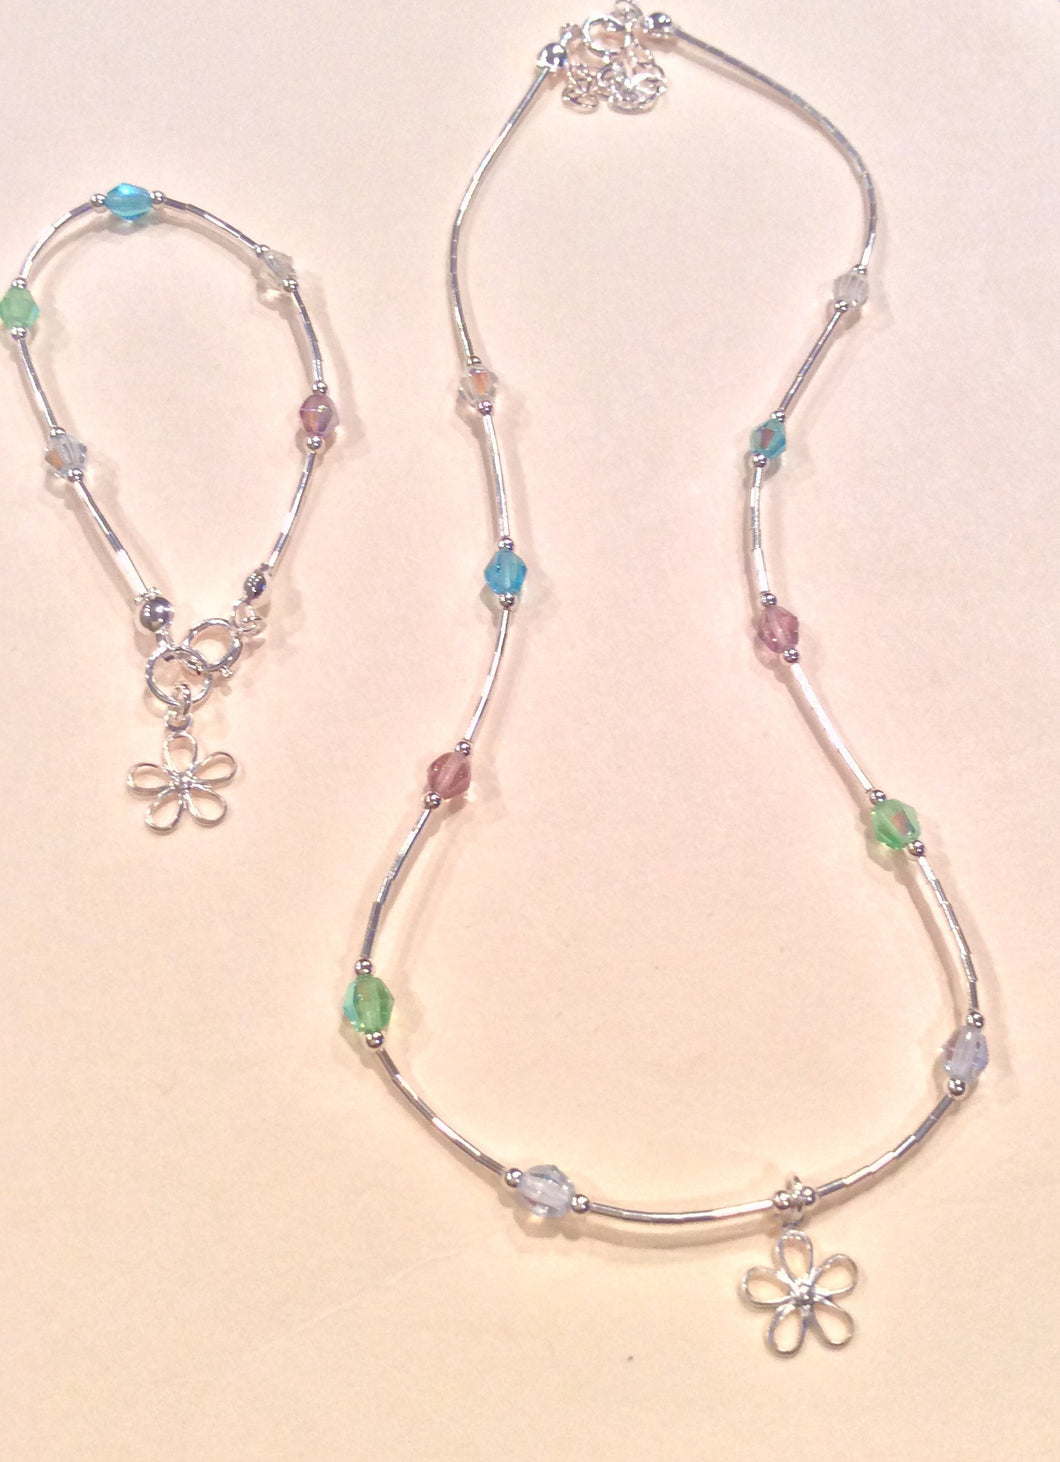 Flower Charm Necklace & Bracelet Set w/Multicolor Crystals